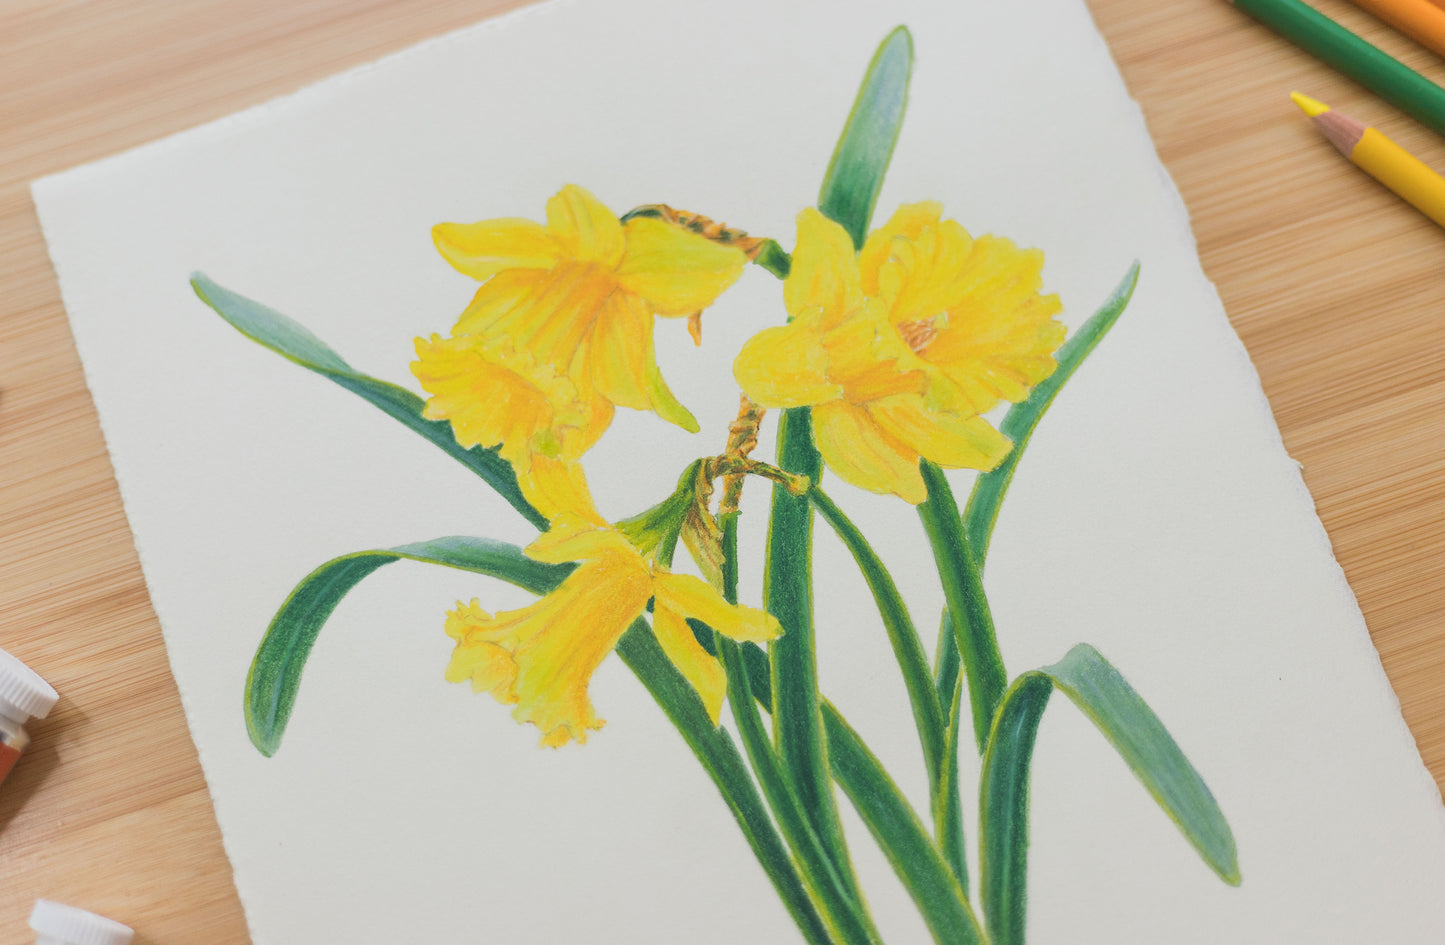 'Daffodils' mixed media illustration. 8x10in